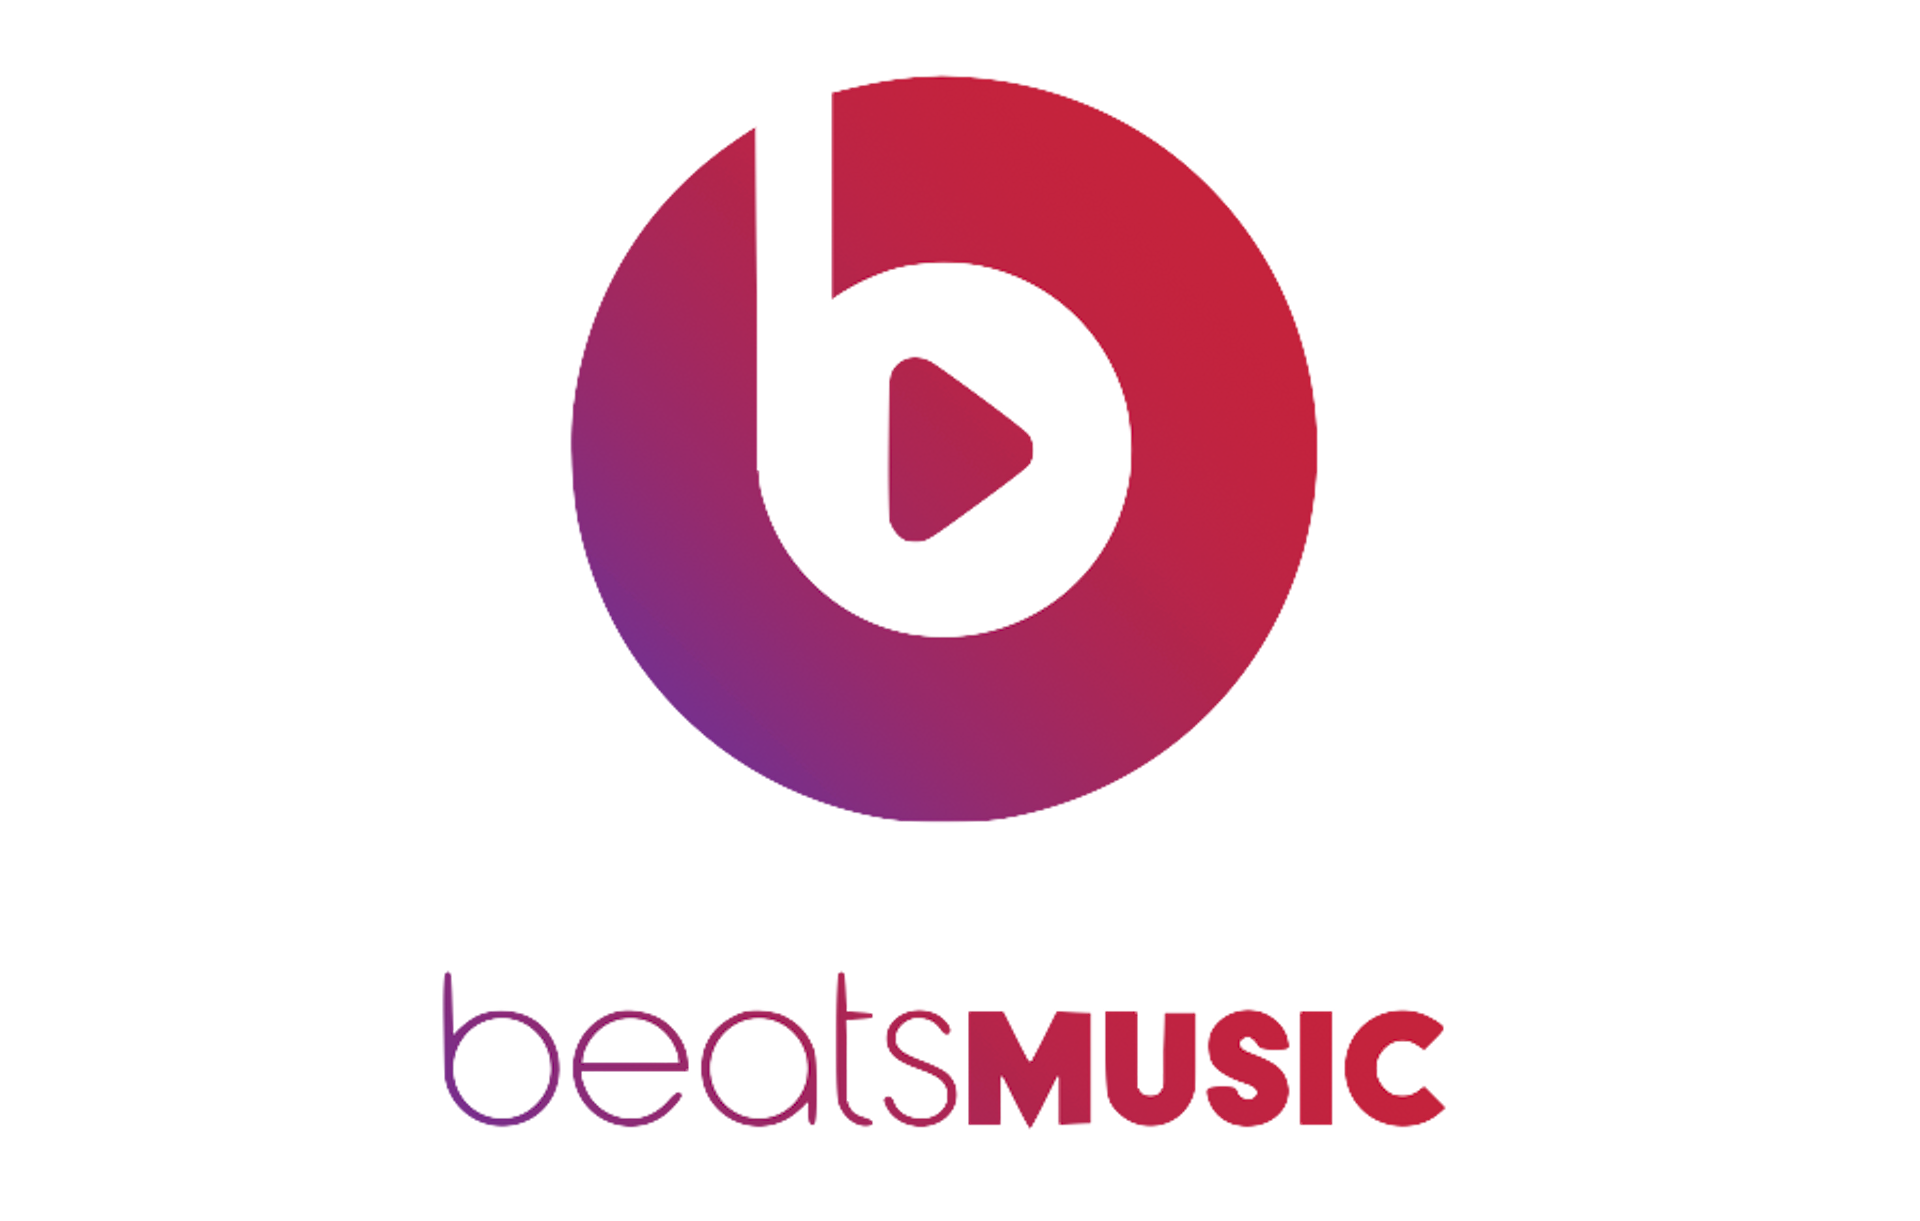 Beats Electronics Logo Apple,